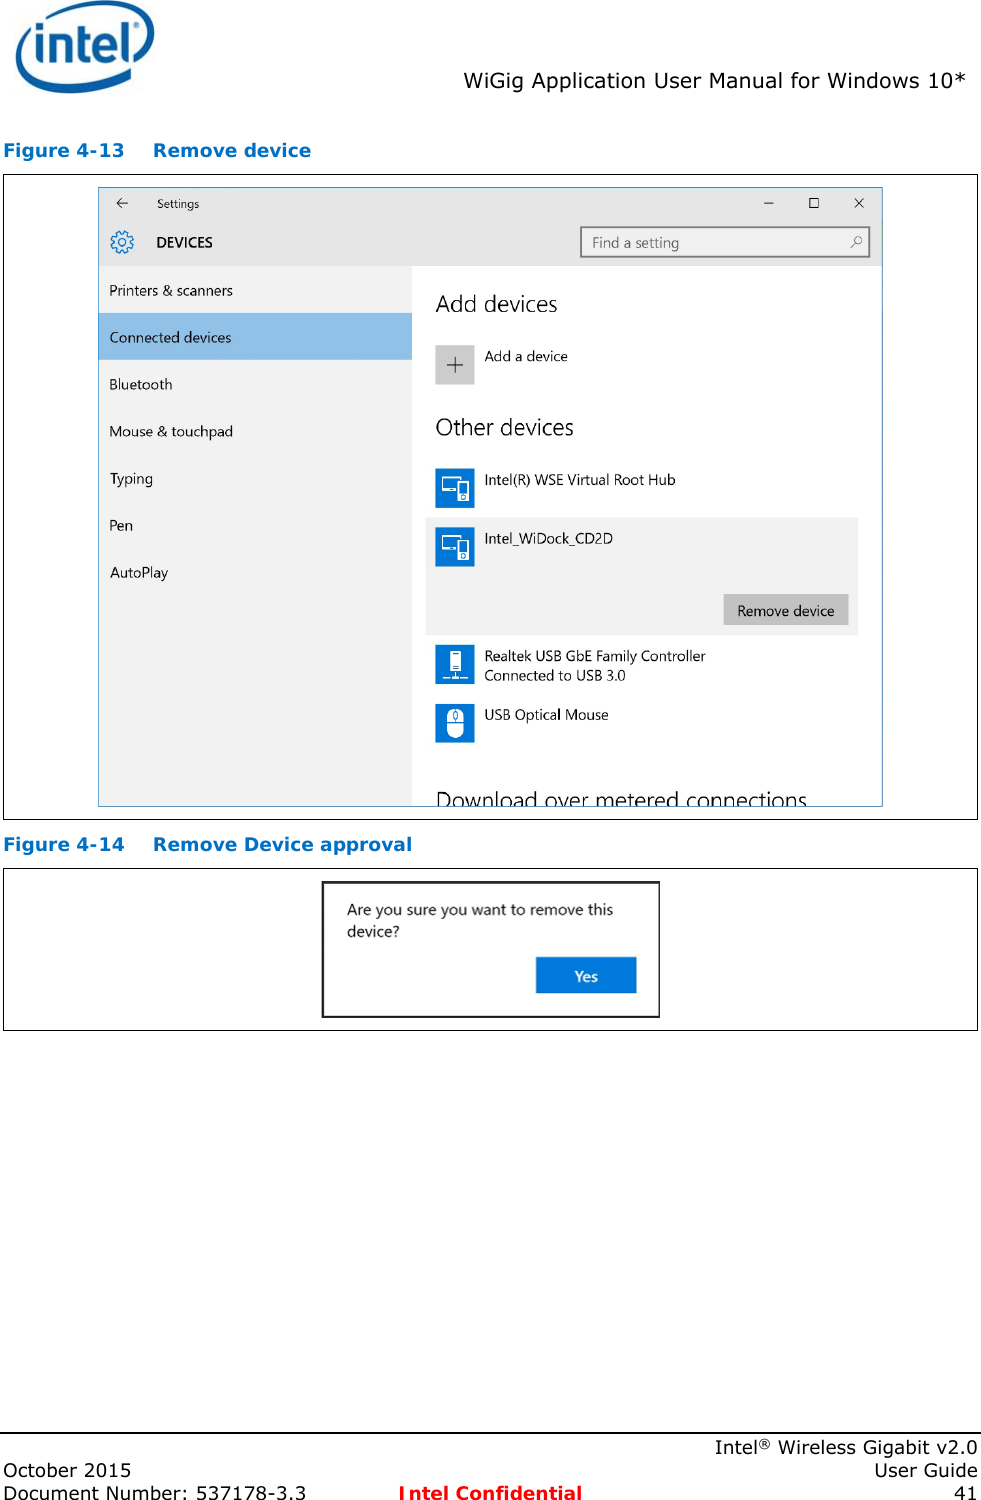  WiGig Application User Manual for Windows 10*    Intel® Wireless Gigabit v2.0 October 2015    User Guide Document Number: 537178-3.3  Intel Confidential 41 Figure 4-13  Remove device  Figure 4-14  Remove Device approval  